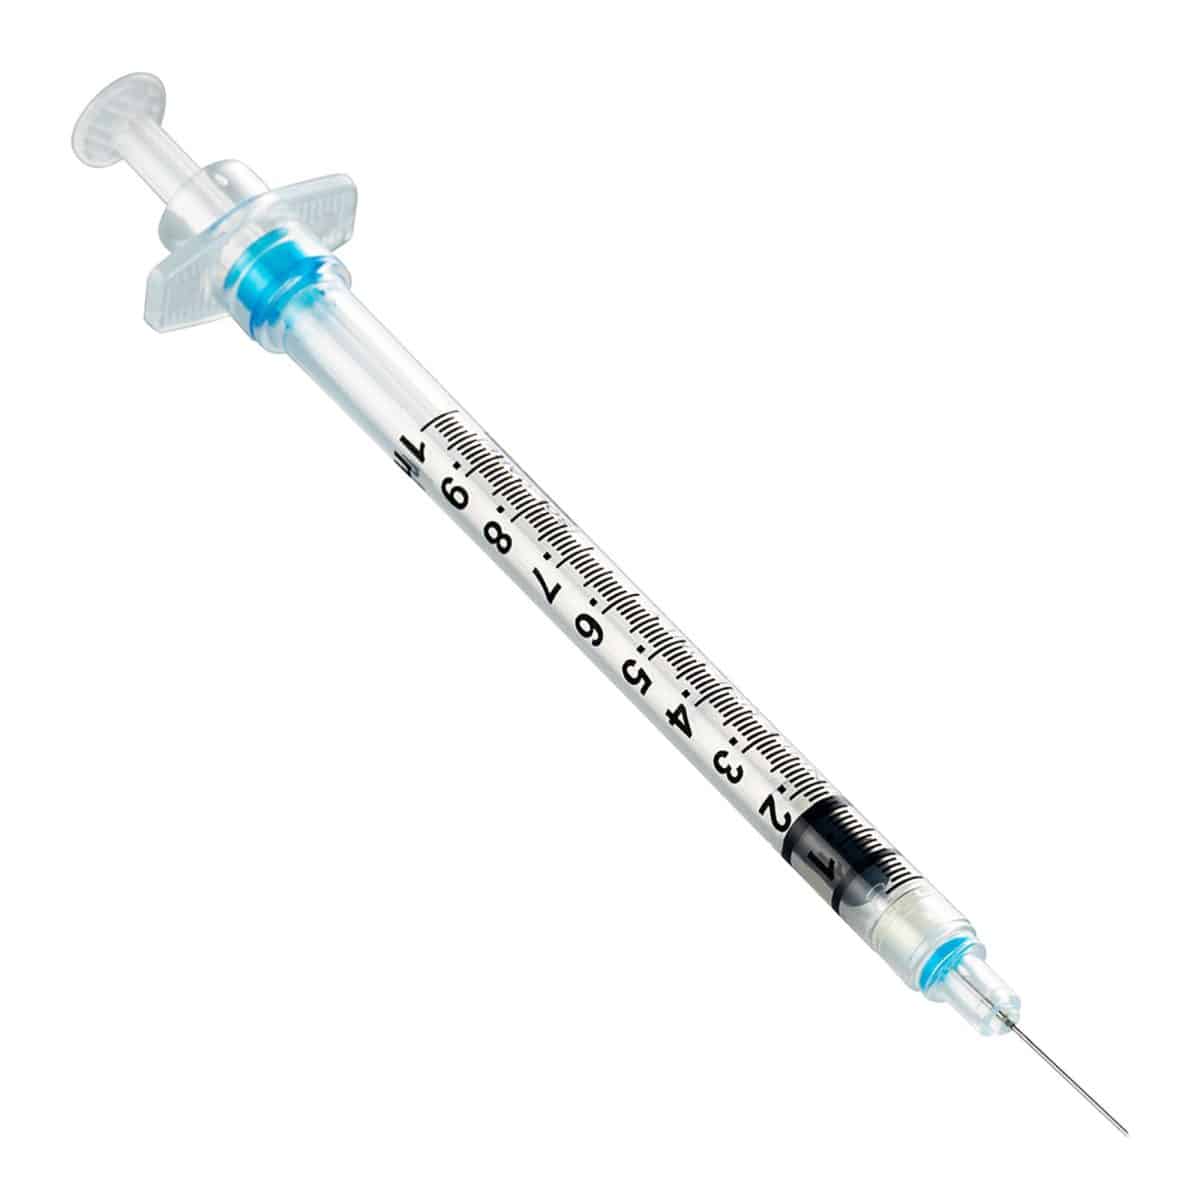 Sol-Care Safety Syringe w/ Fixed Needle | 1ml | 27G x 1/2" | SOLM 100019IM | Box of 100